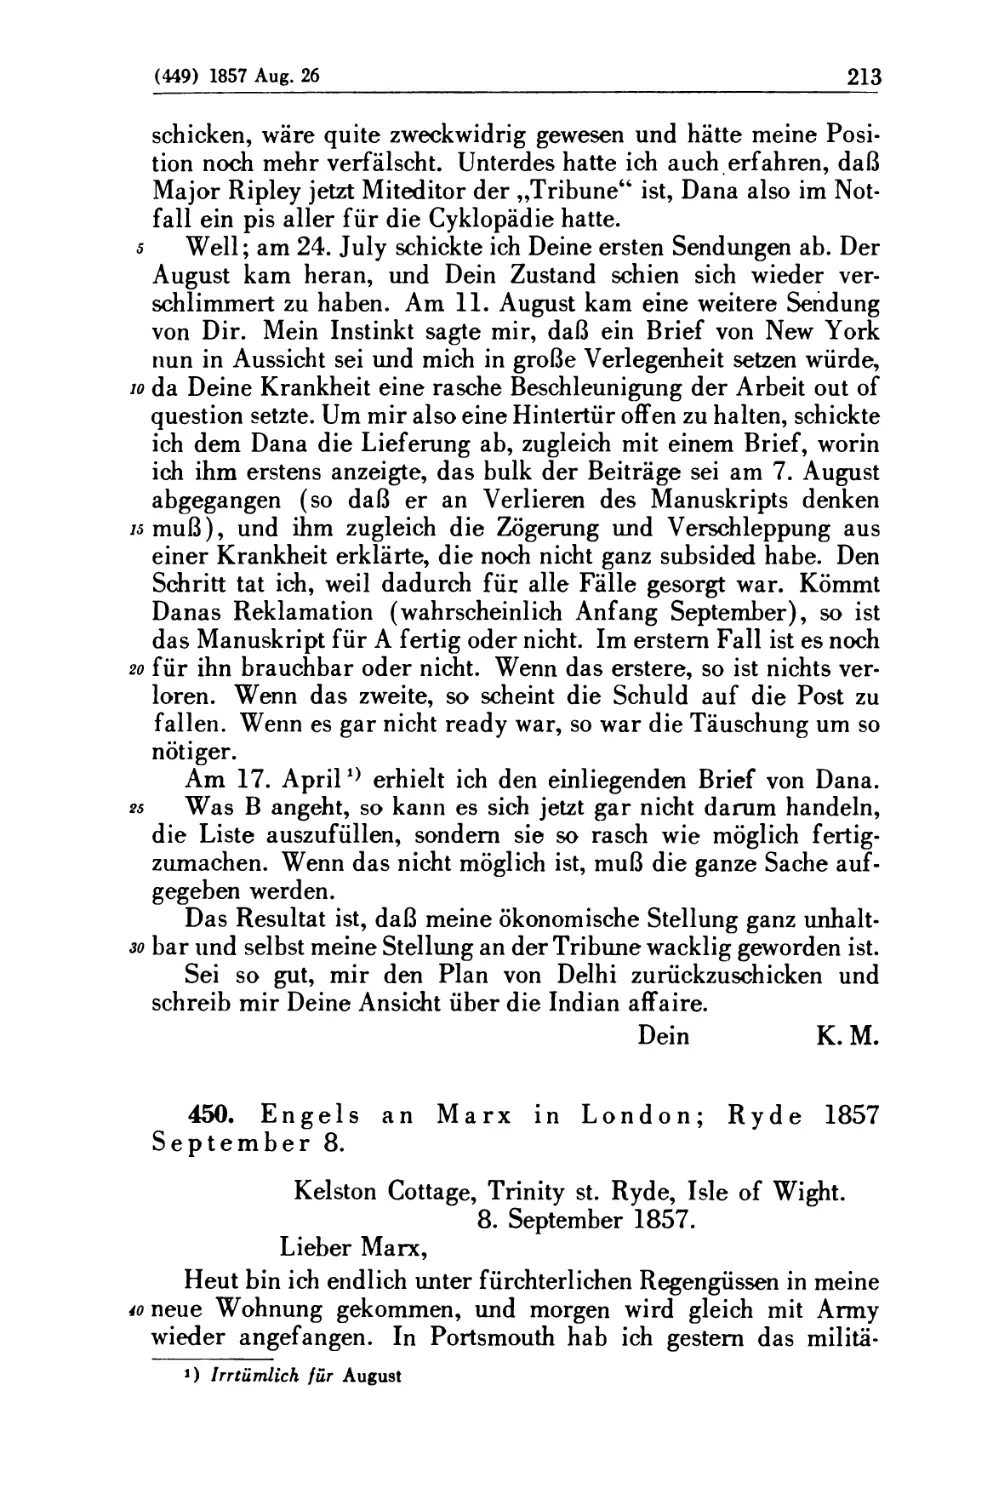 450. Engels an Marx in London; Ryde 1857 September 8